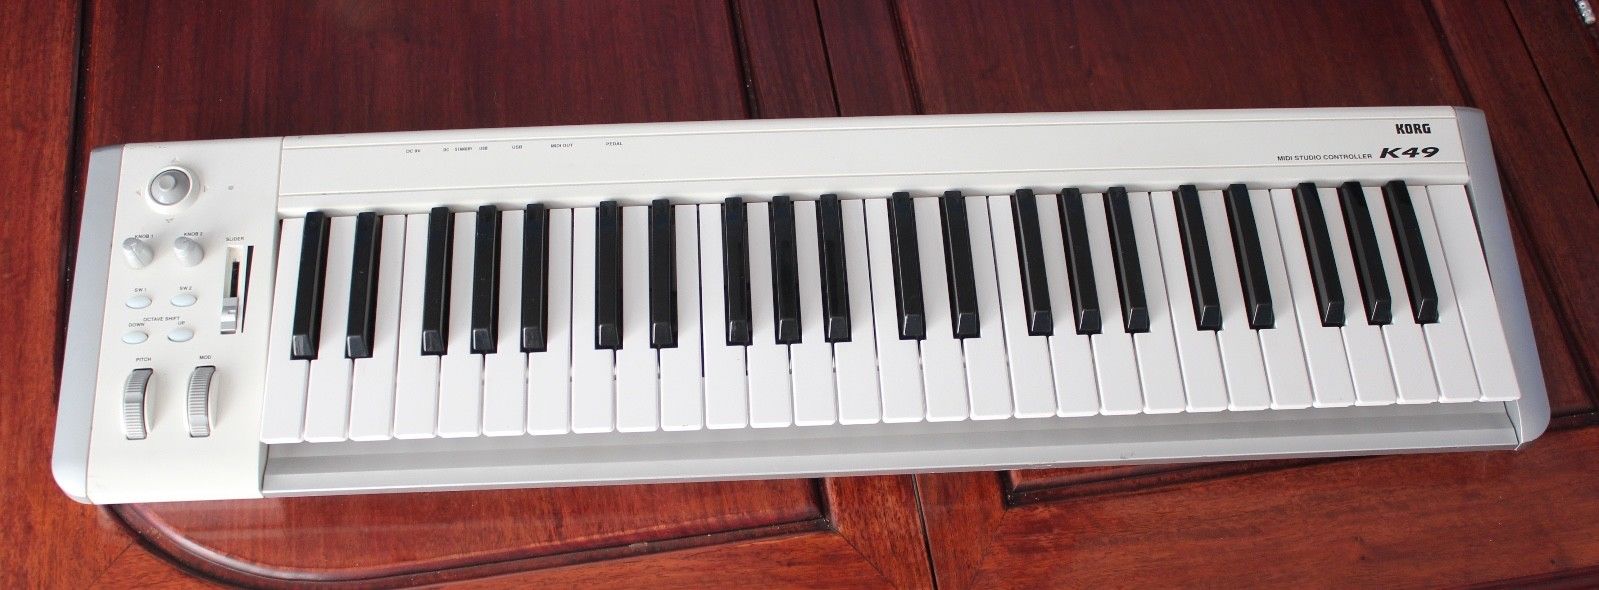 KORG K49 49 Note USB MIDI Controller Keyboard